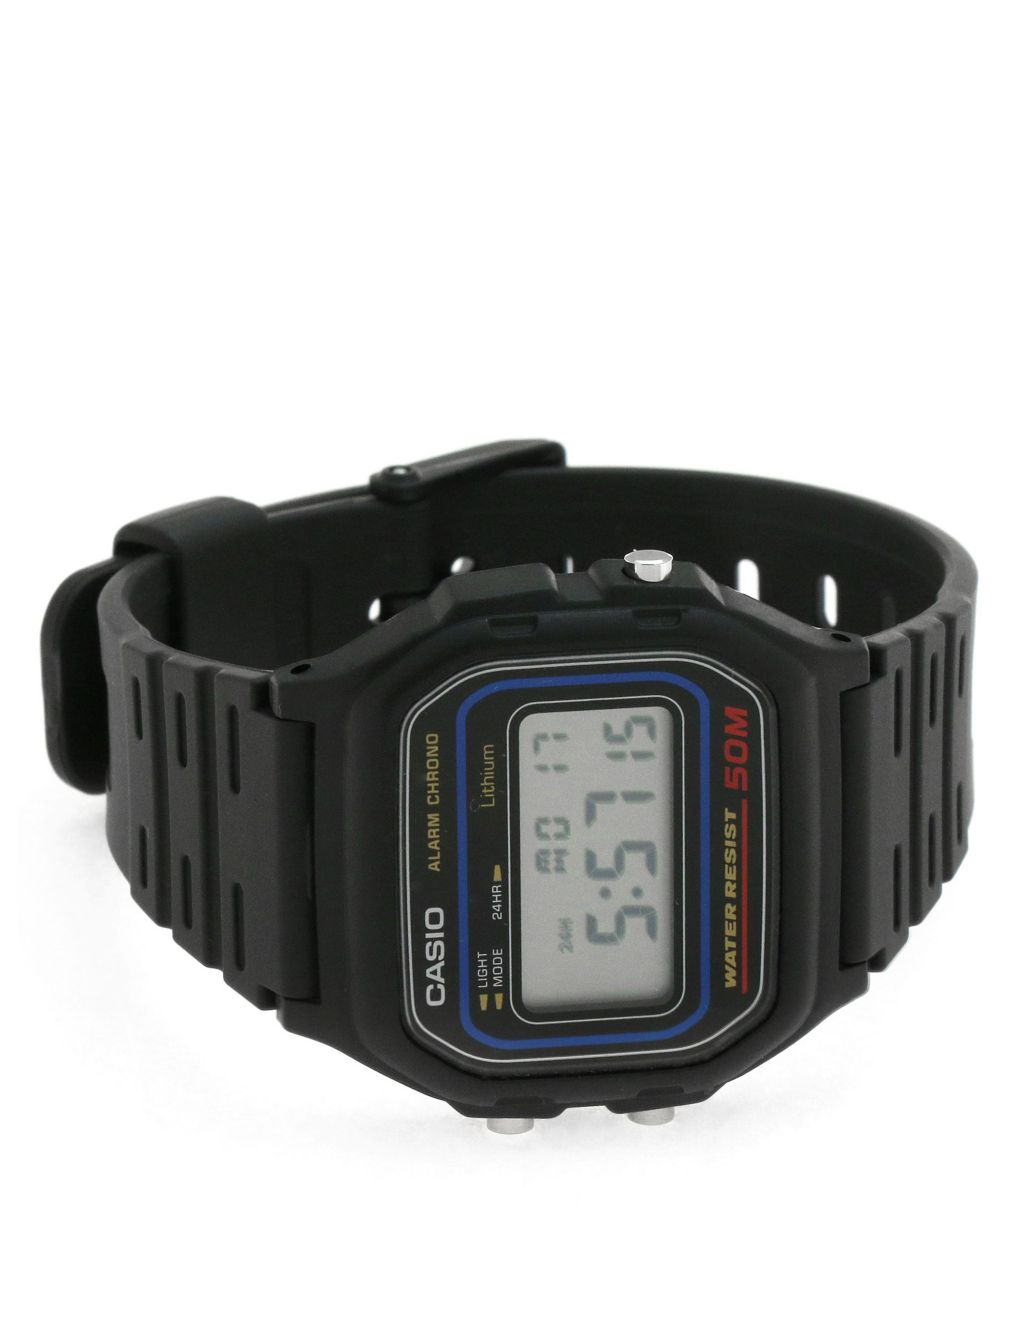 Casio Classic Chronograph Black Watch 1 of 4